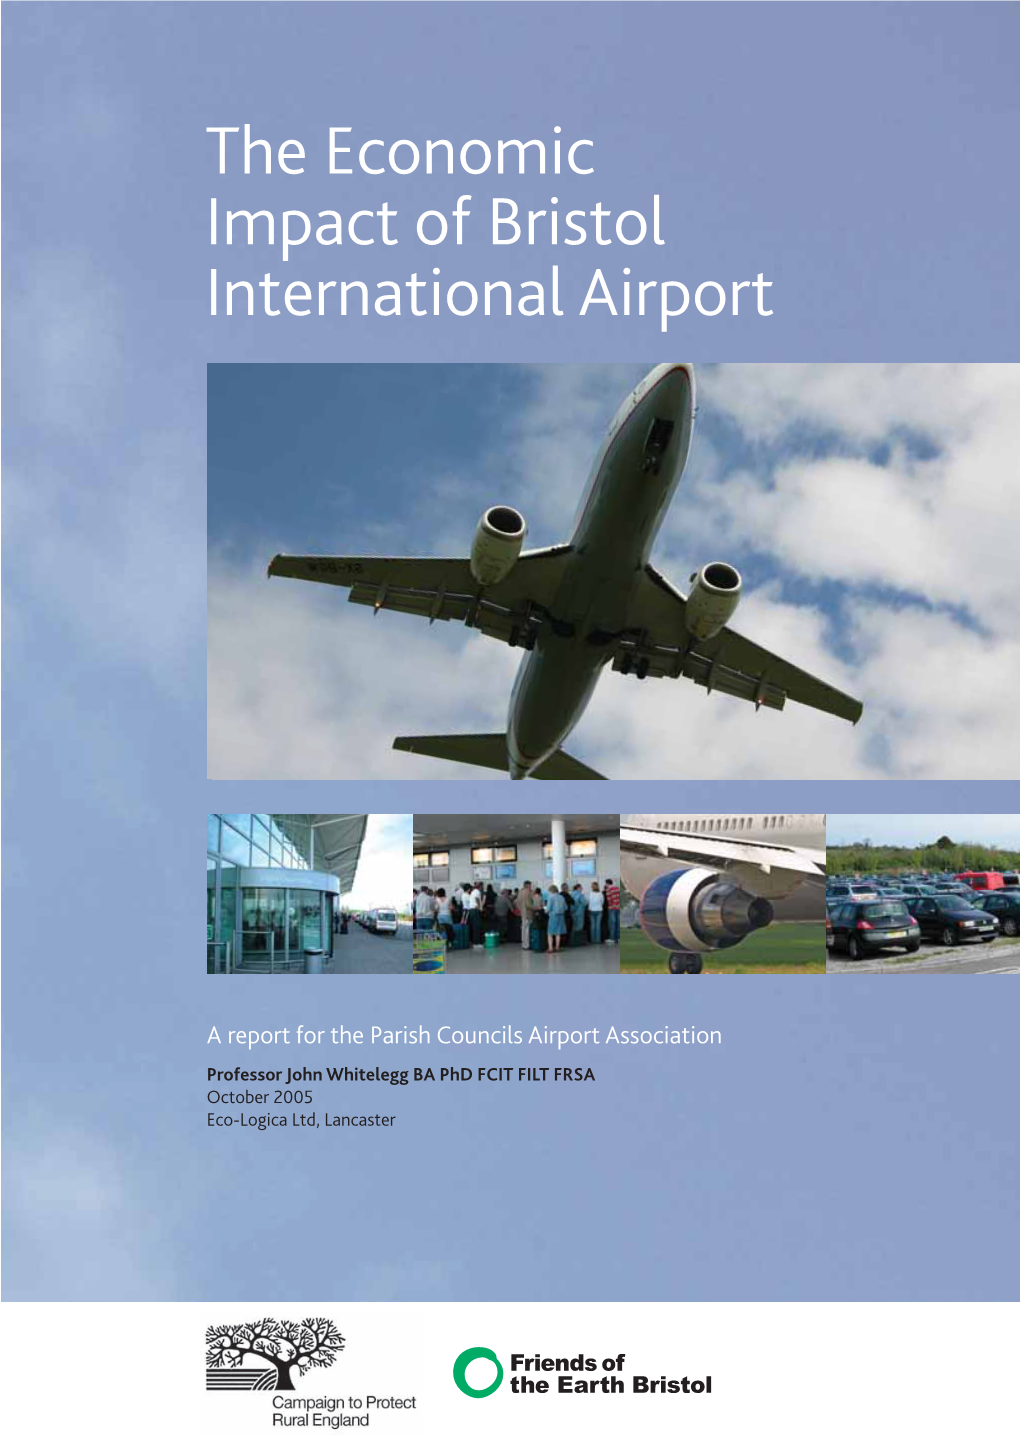 The Economic Impact of Bristol International Airport